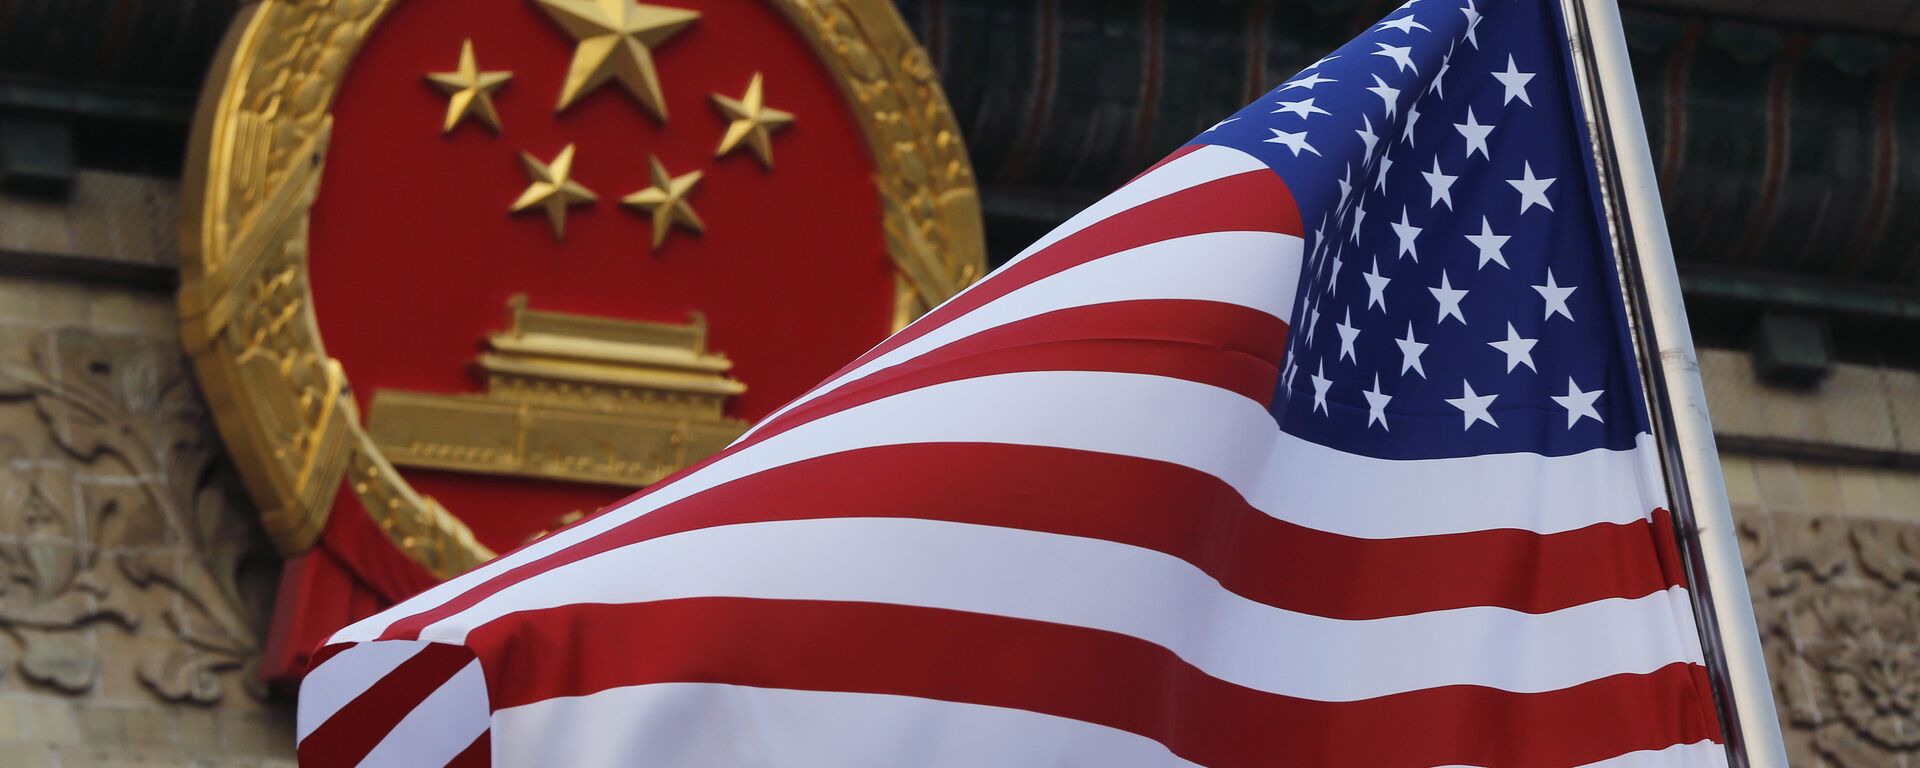 La bandera de EEUU y el emblema de China  - Sputnik Mundo, 1920, 14.05.2021